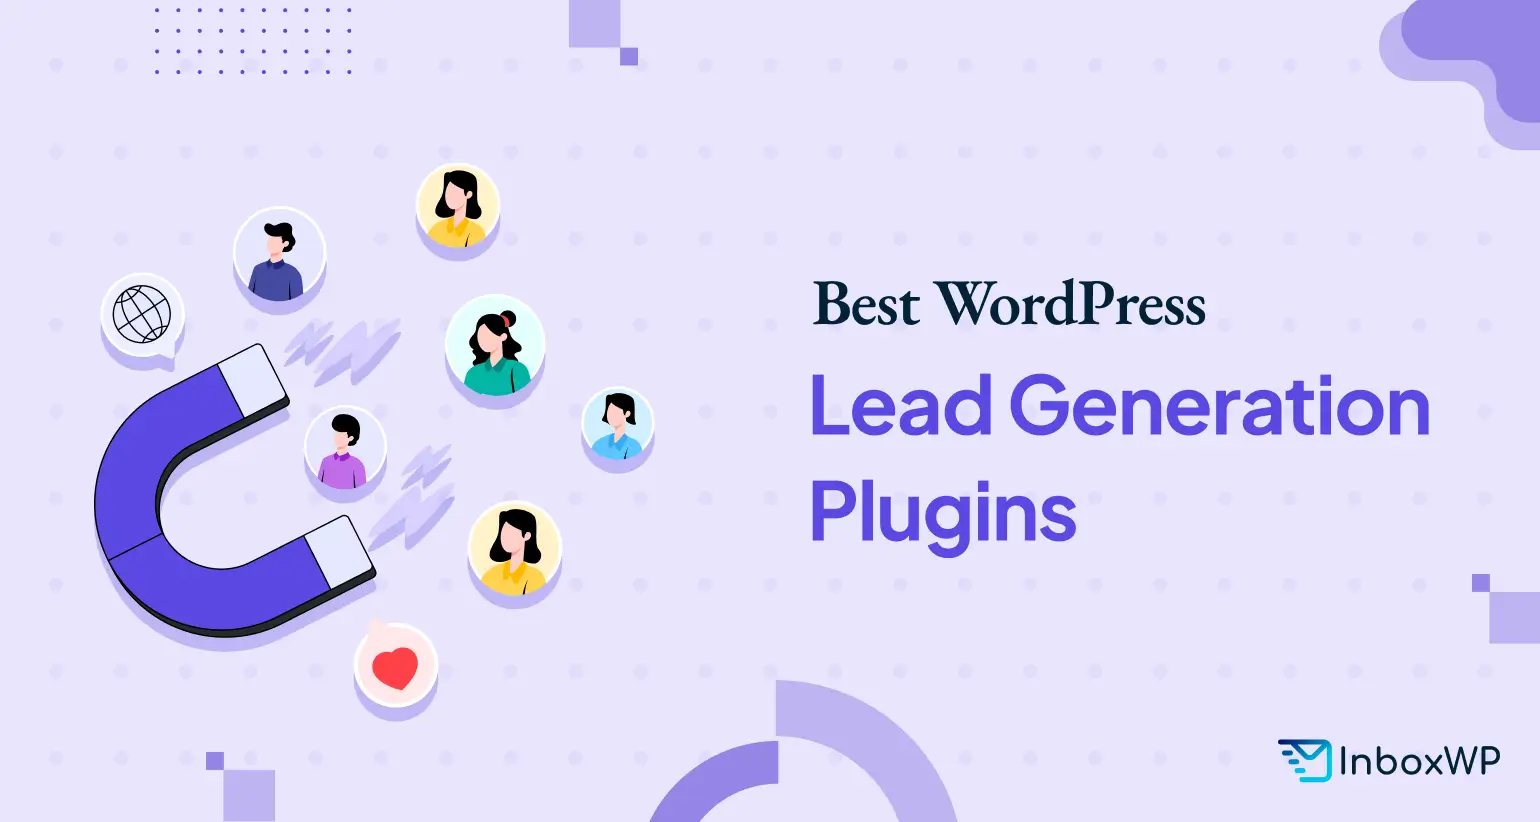 How to Choose the Best WordPress Lead Generation Plugin